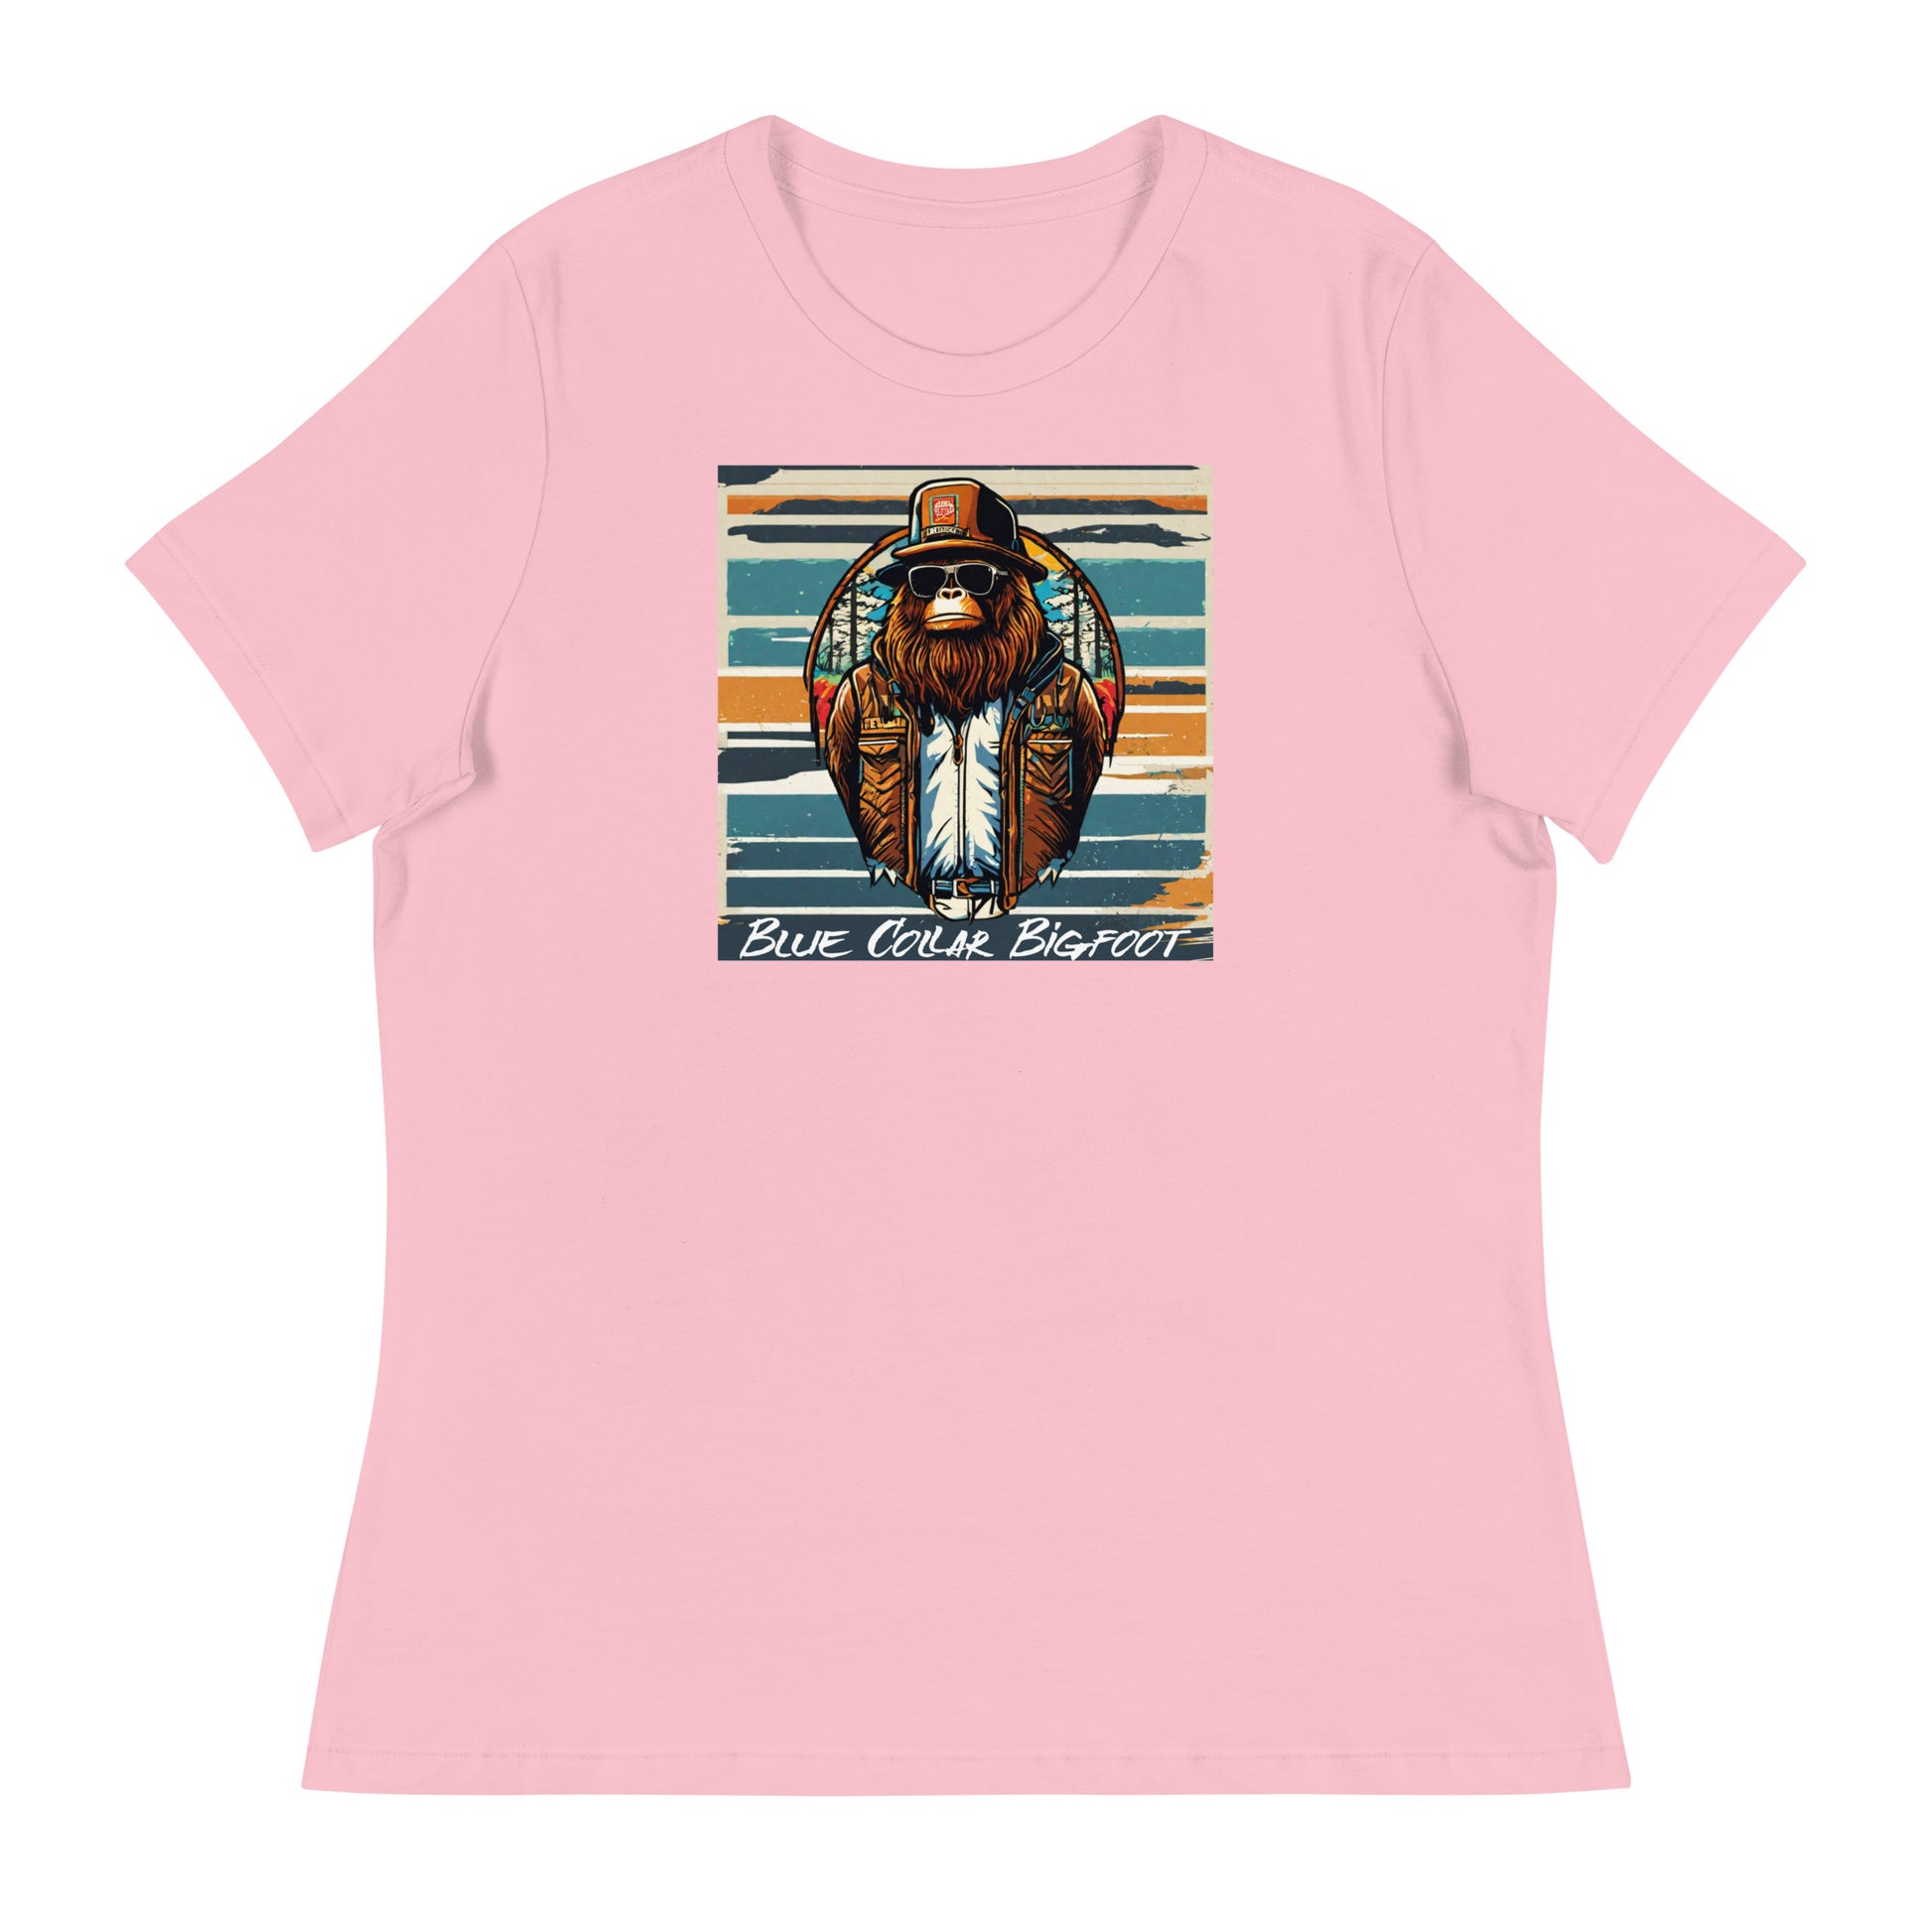 Blue-Collar Bigfoot Women's Graphic T-Shirt Pink